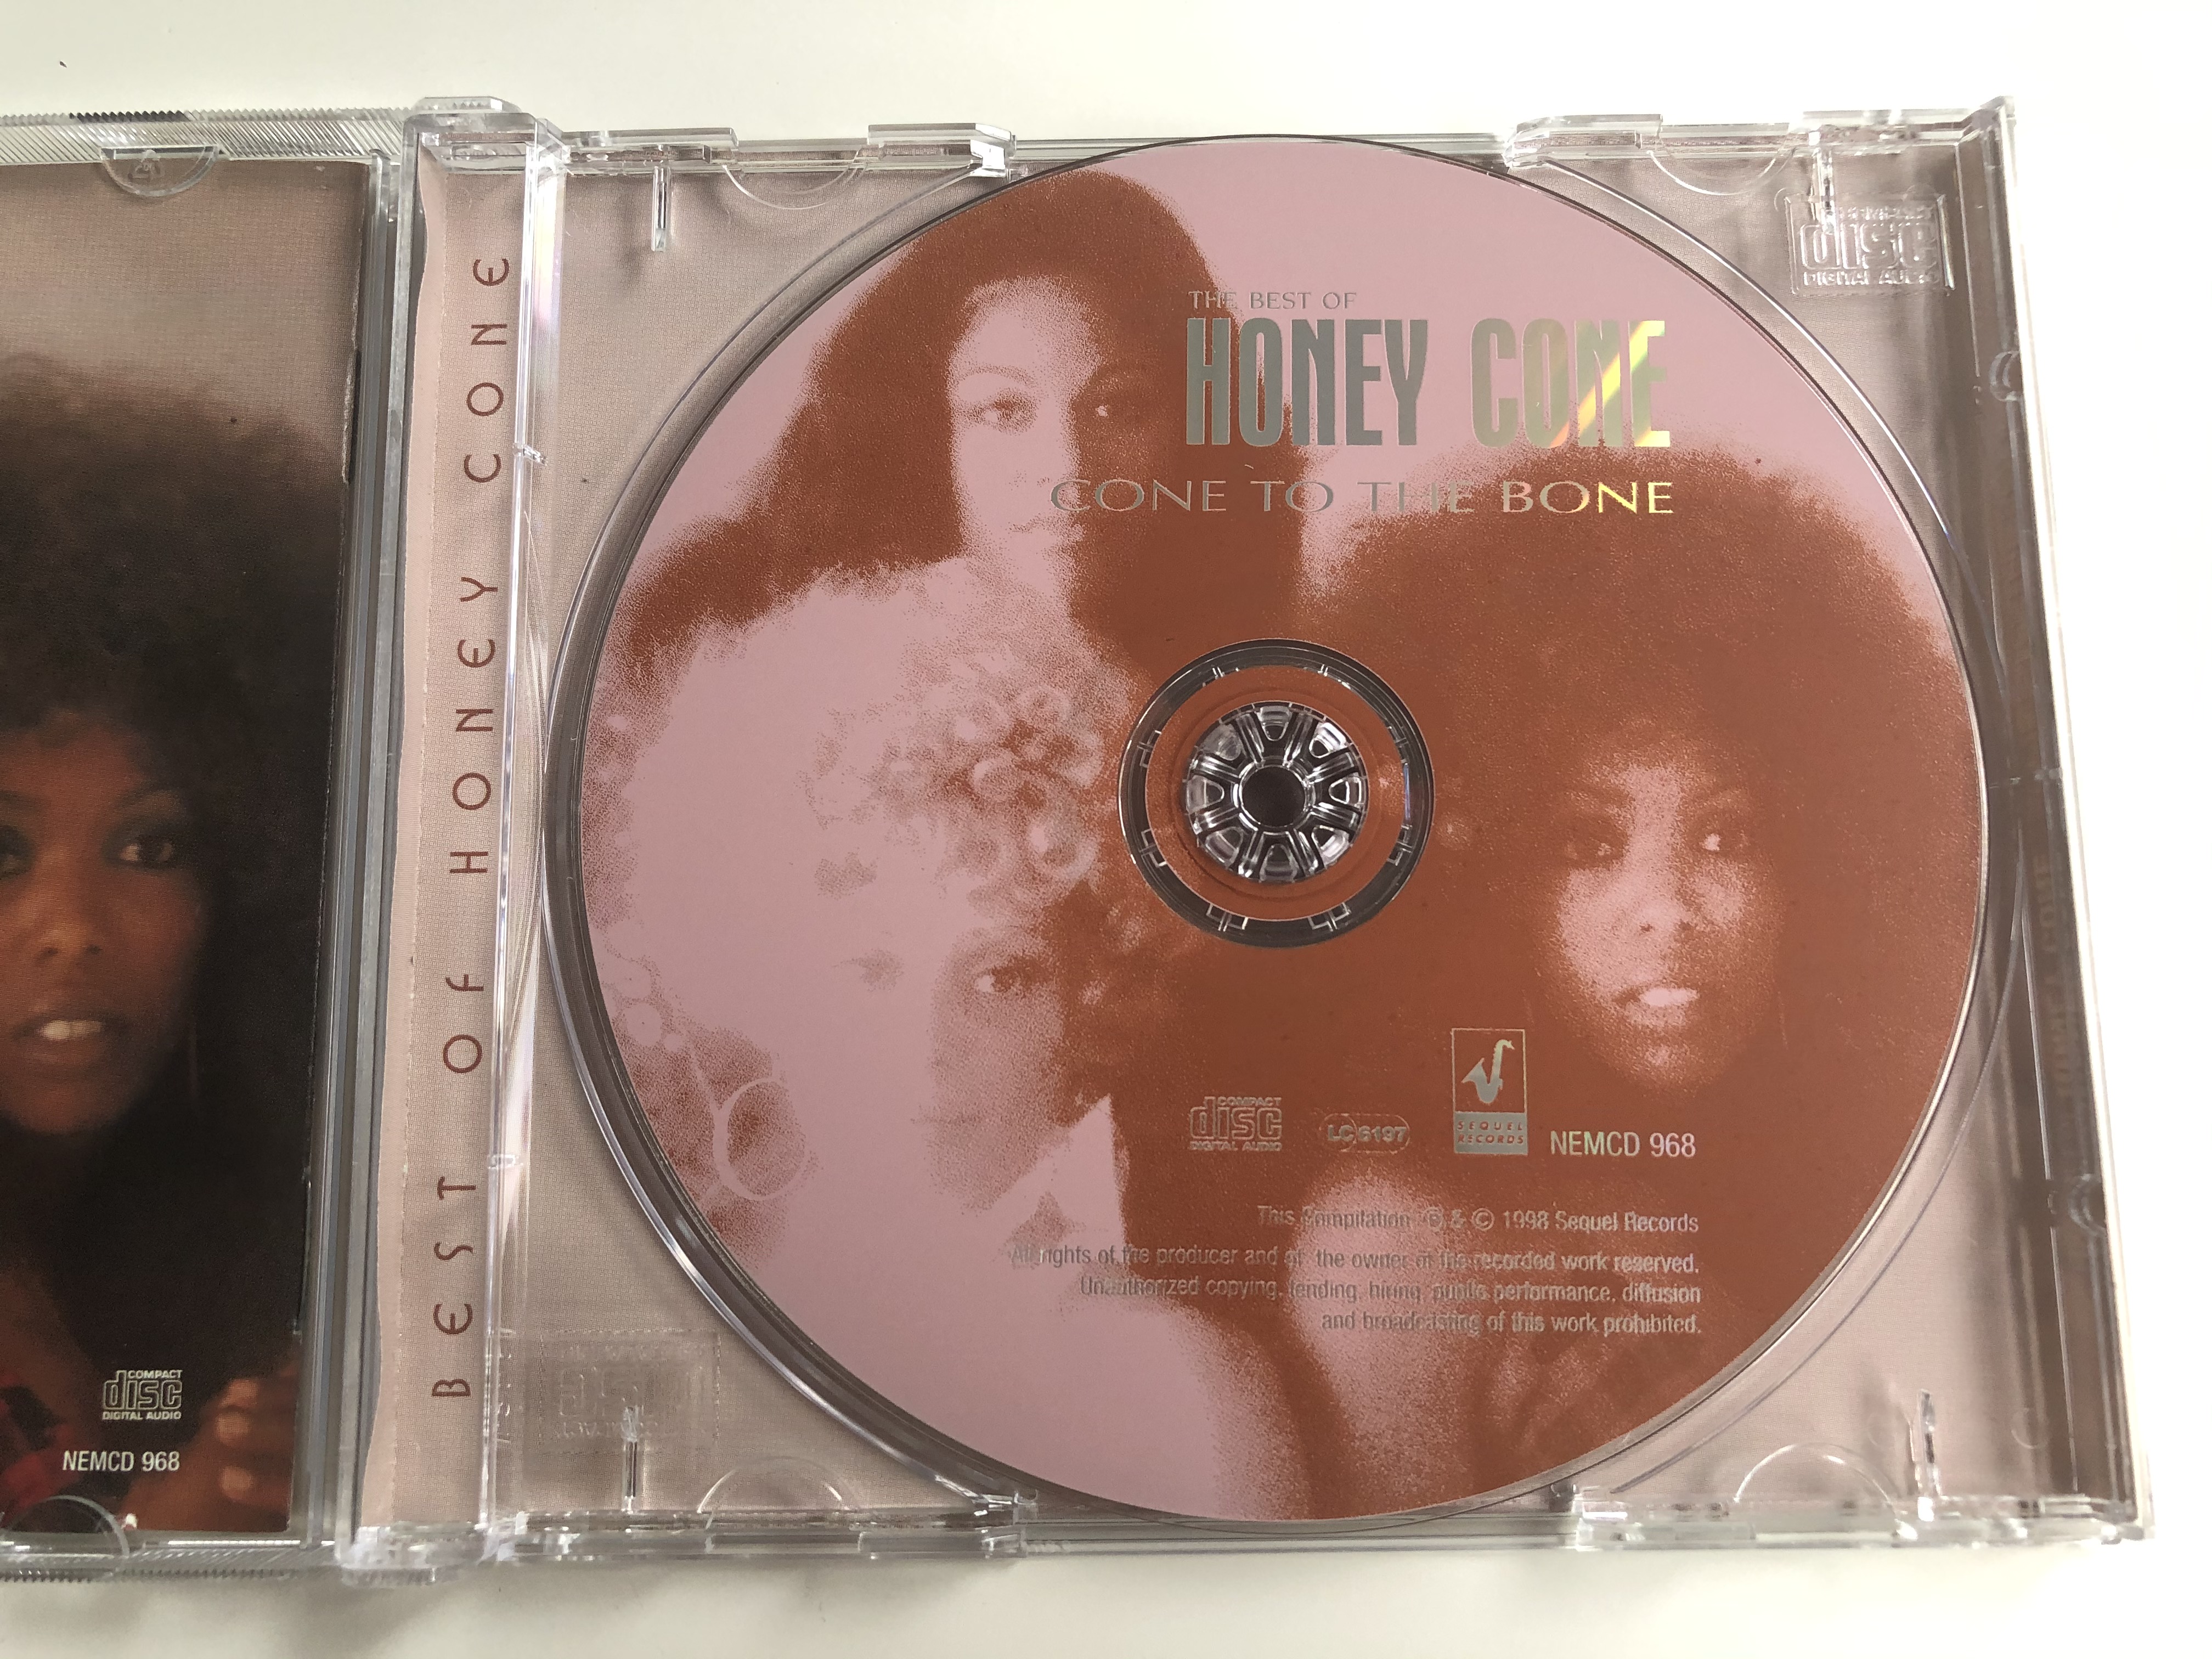 the-best-of-honey-cone-cone-to-the-bone-sequel-records-audio-cd-1998-nemcd-968-6-.jpg